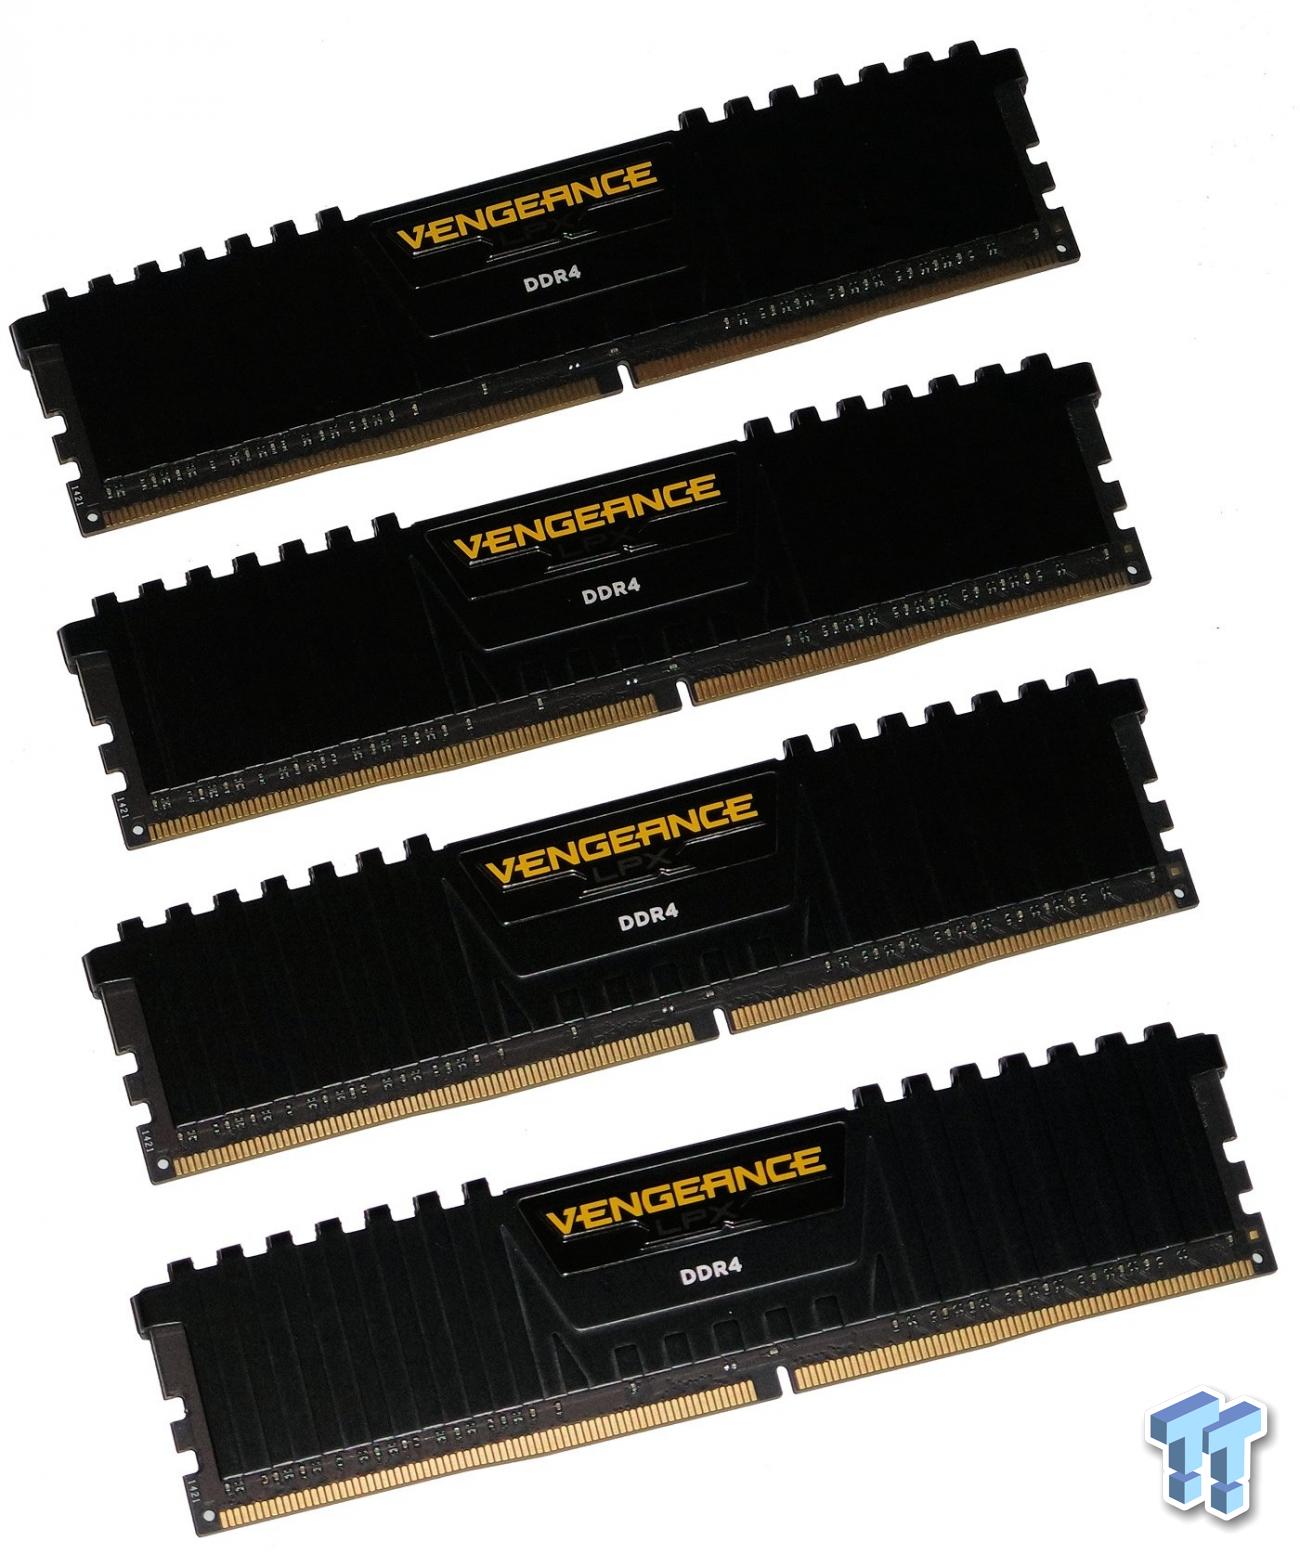 Interpretive stof Mesterskab Corsair Vengeance LPX 16GB DDR4-2800 Quad-Channel Memory Kit Review